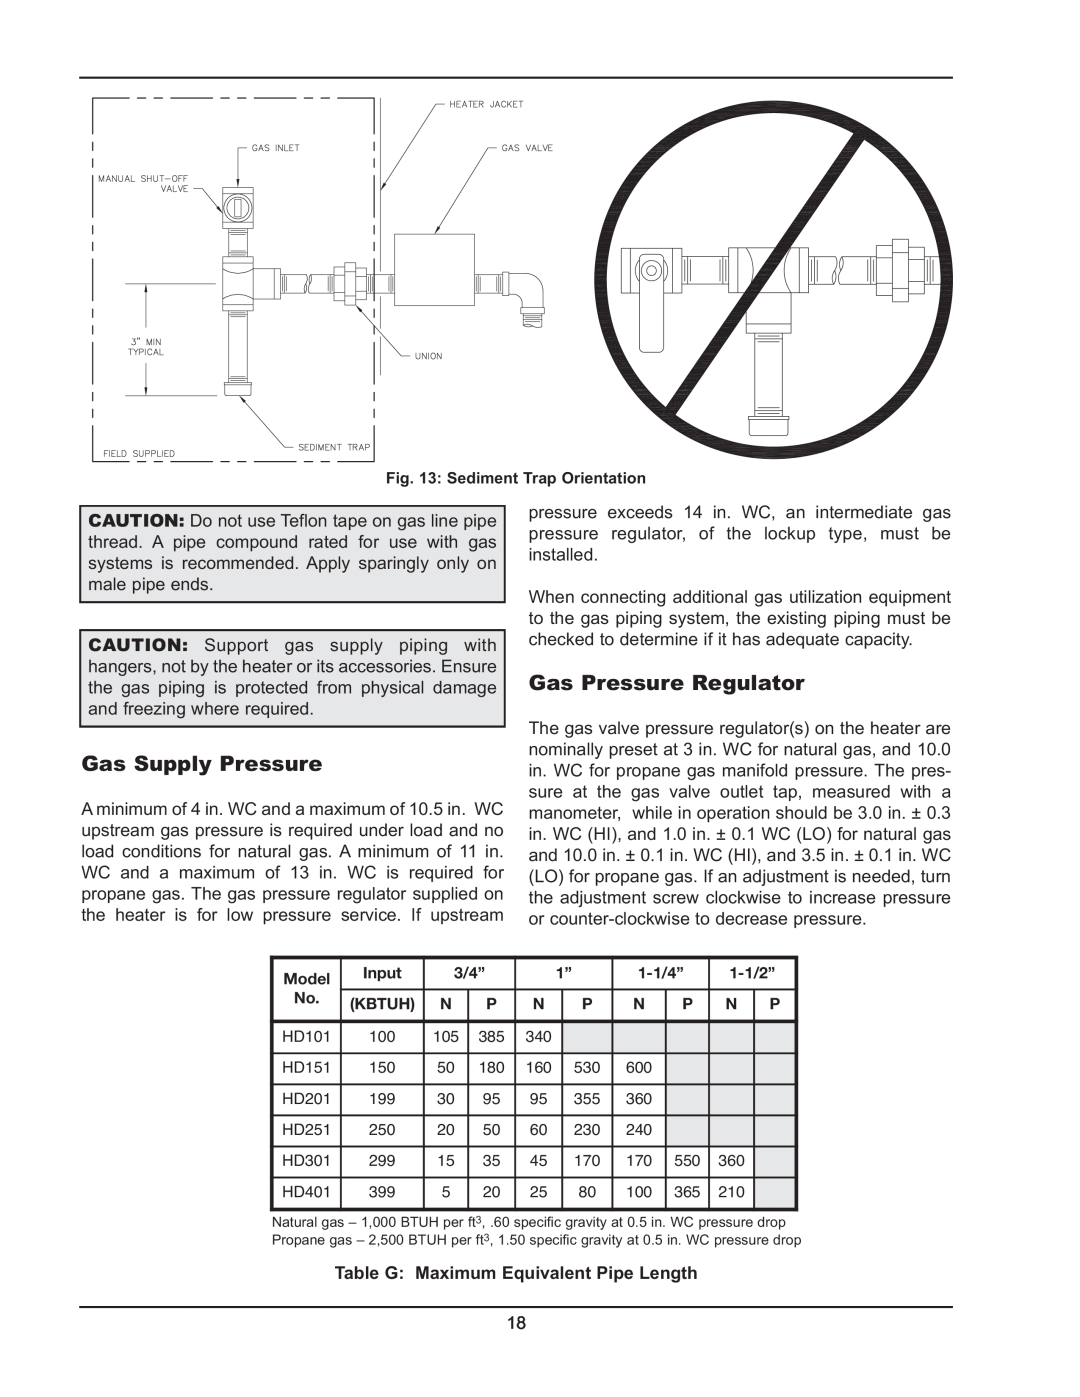 Raypak HD401, HD101 manual Gas Supply Pressure, Gas Pressure Regulator, Table G Maximum Equivalent Pipe Length 